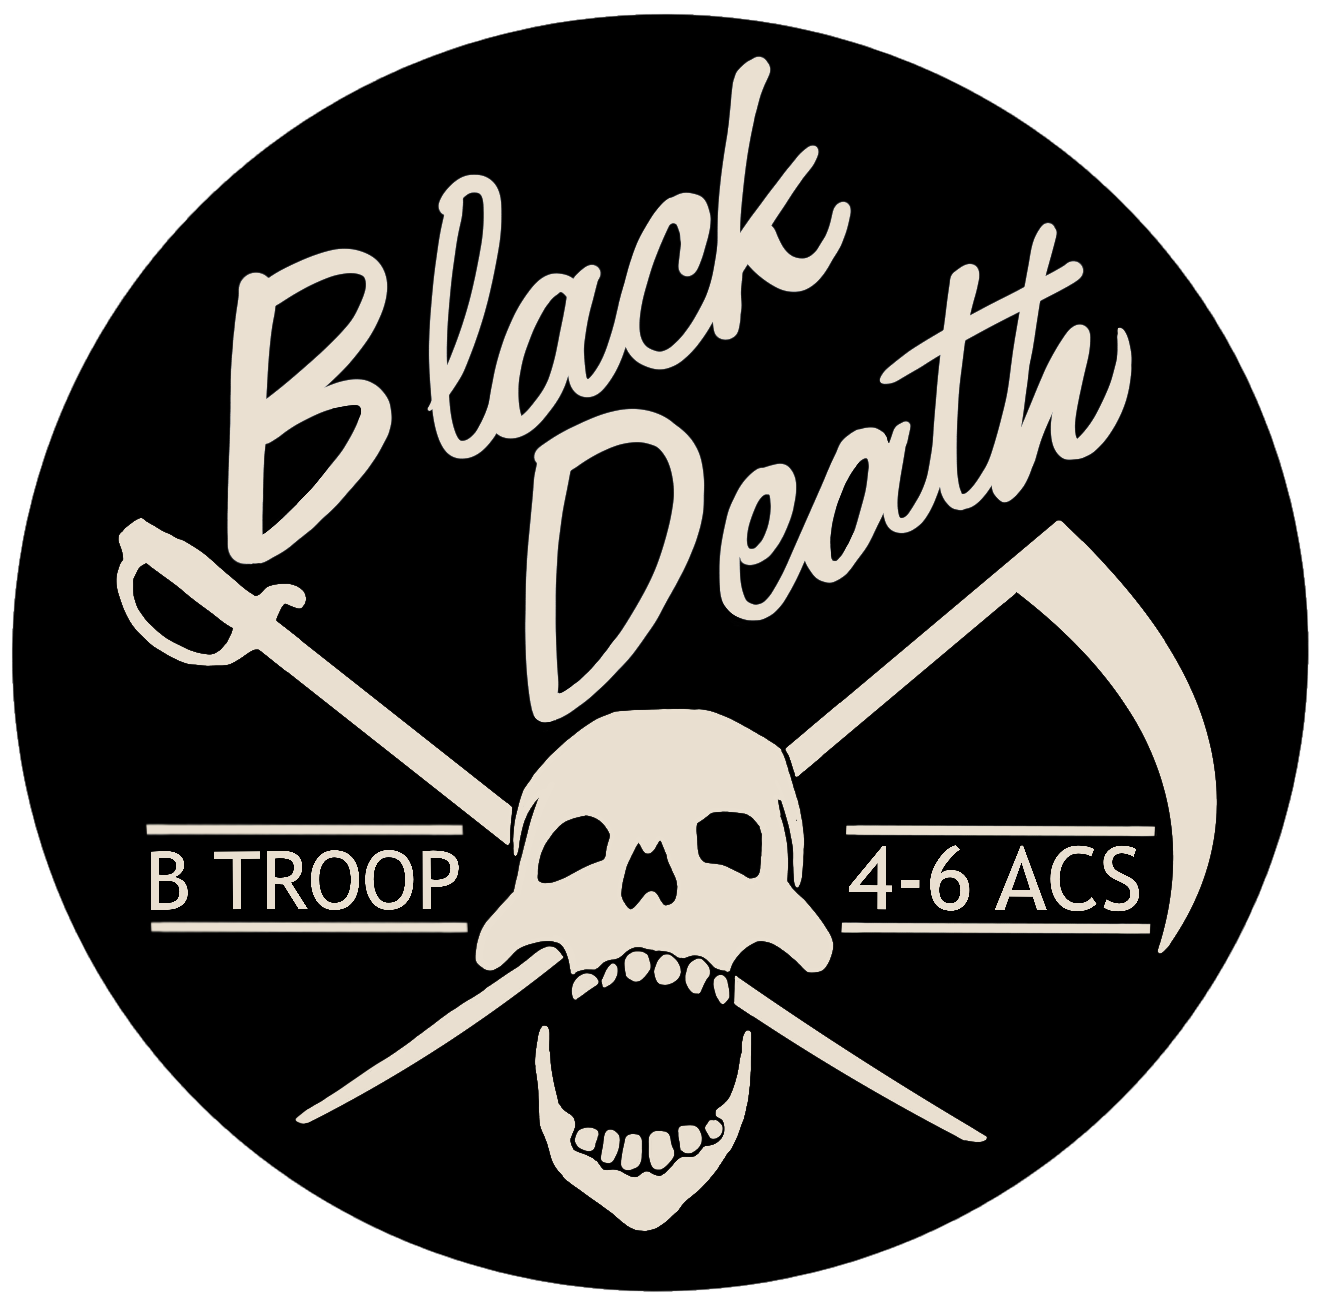 B TRP, 4-6 ACS "Black Death"